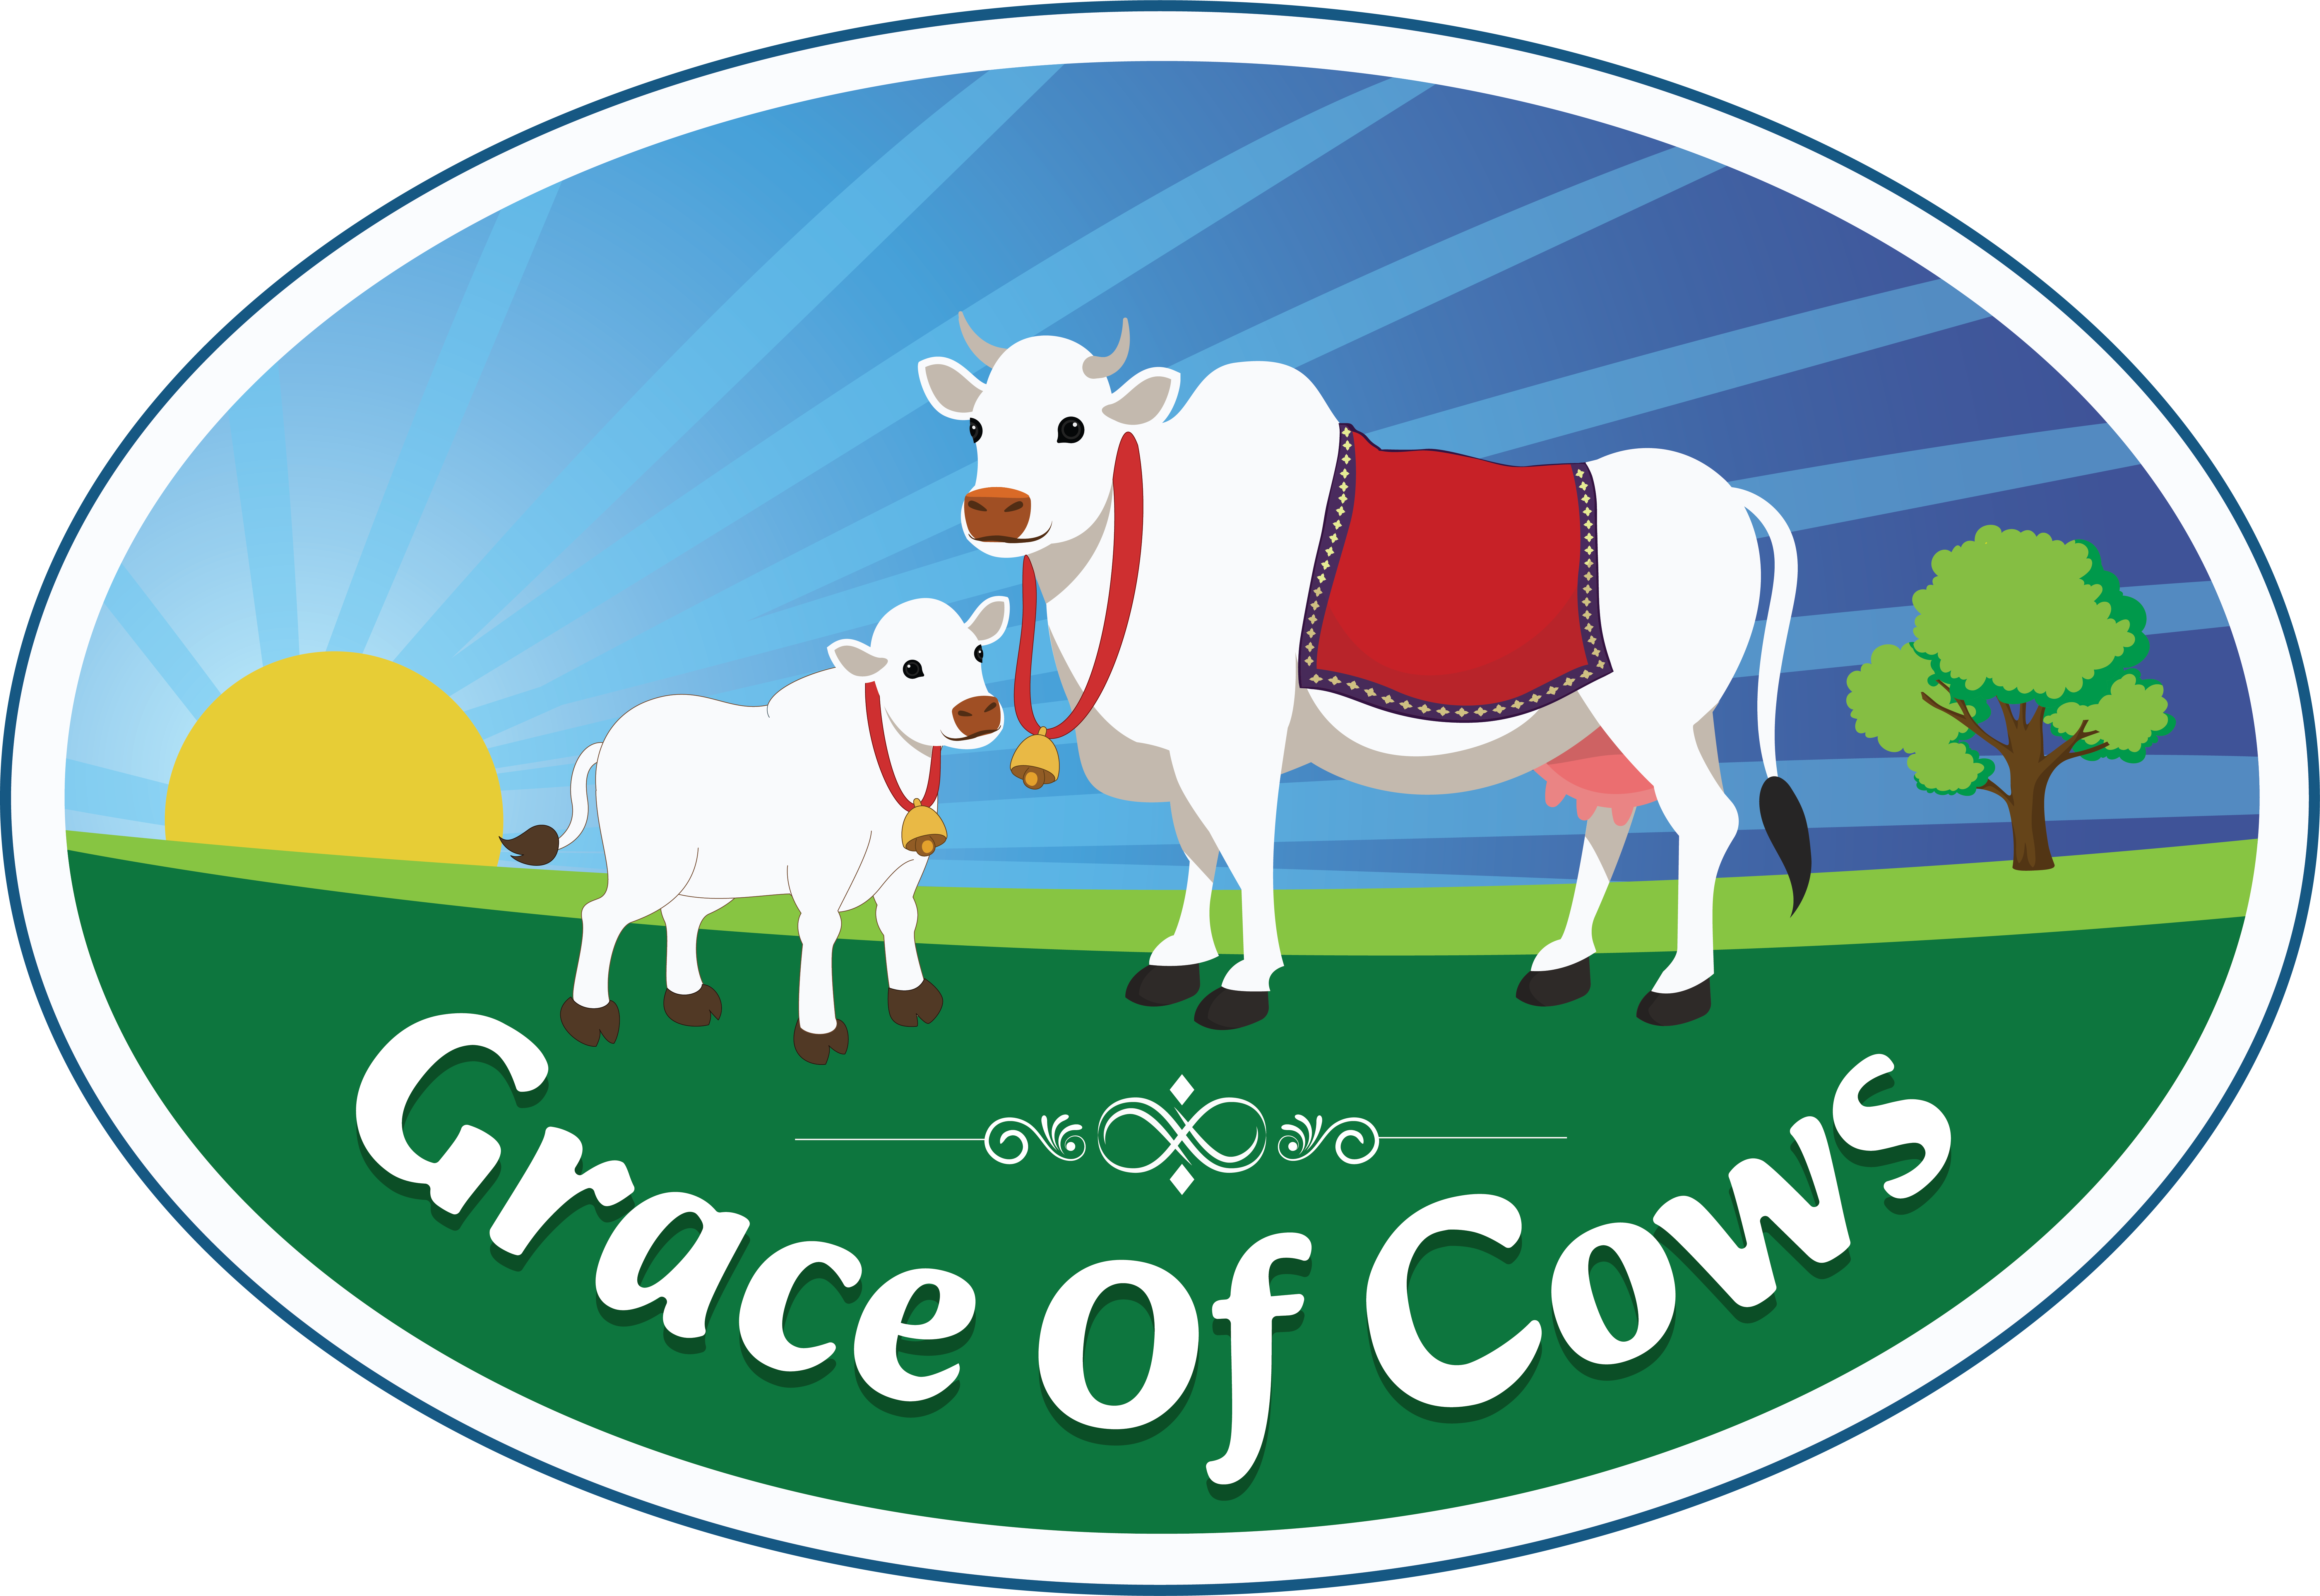 Grace of Cows